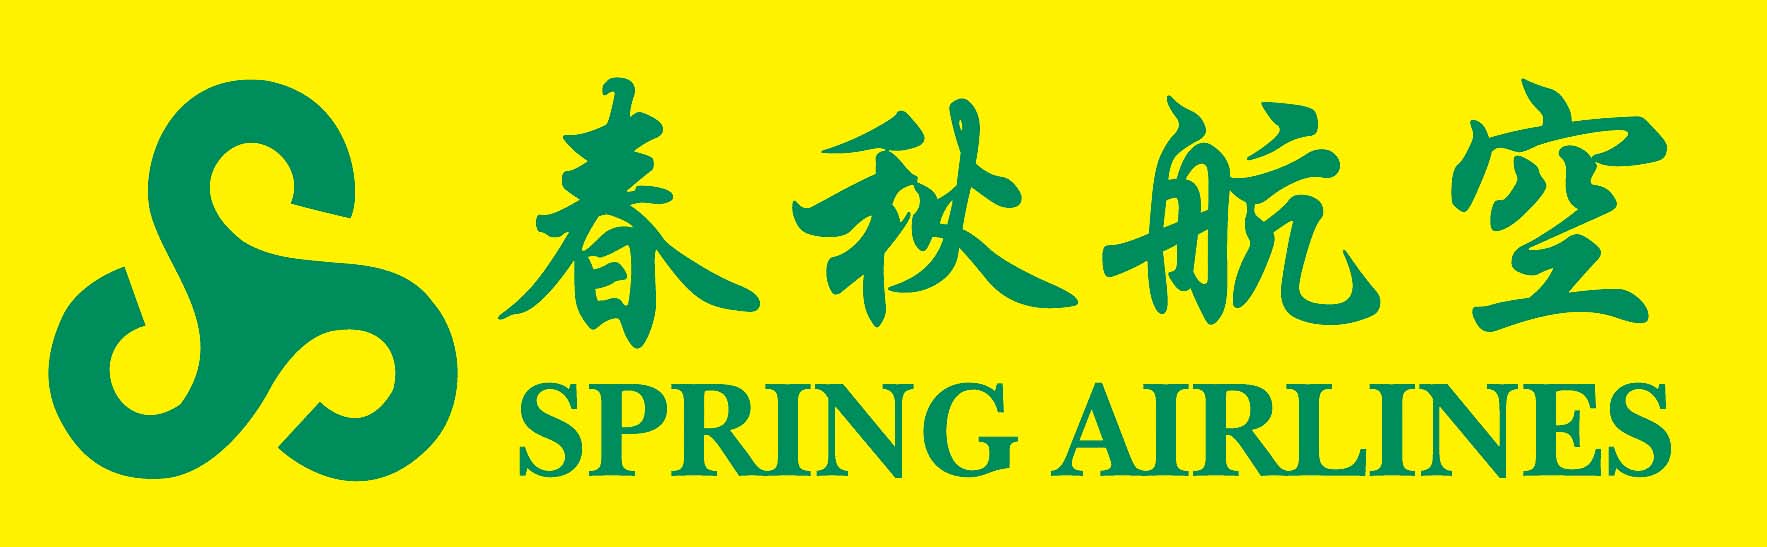 Spring Airlines Brand Logo